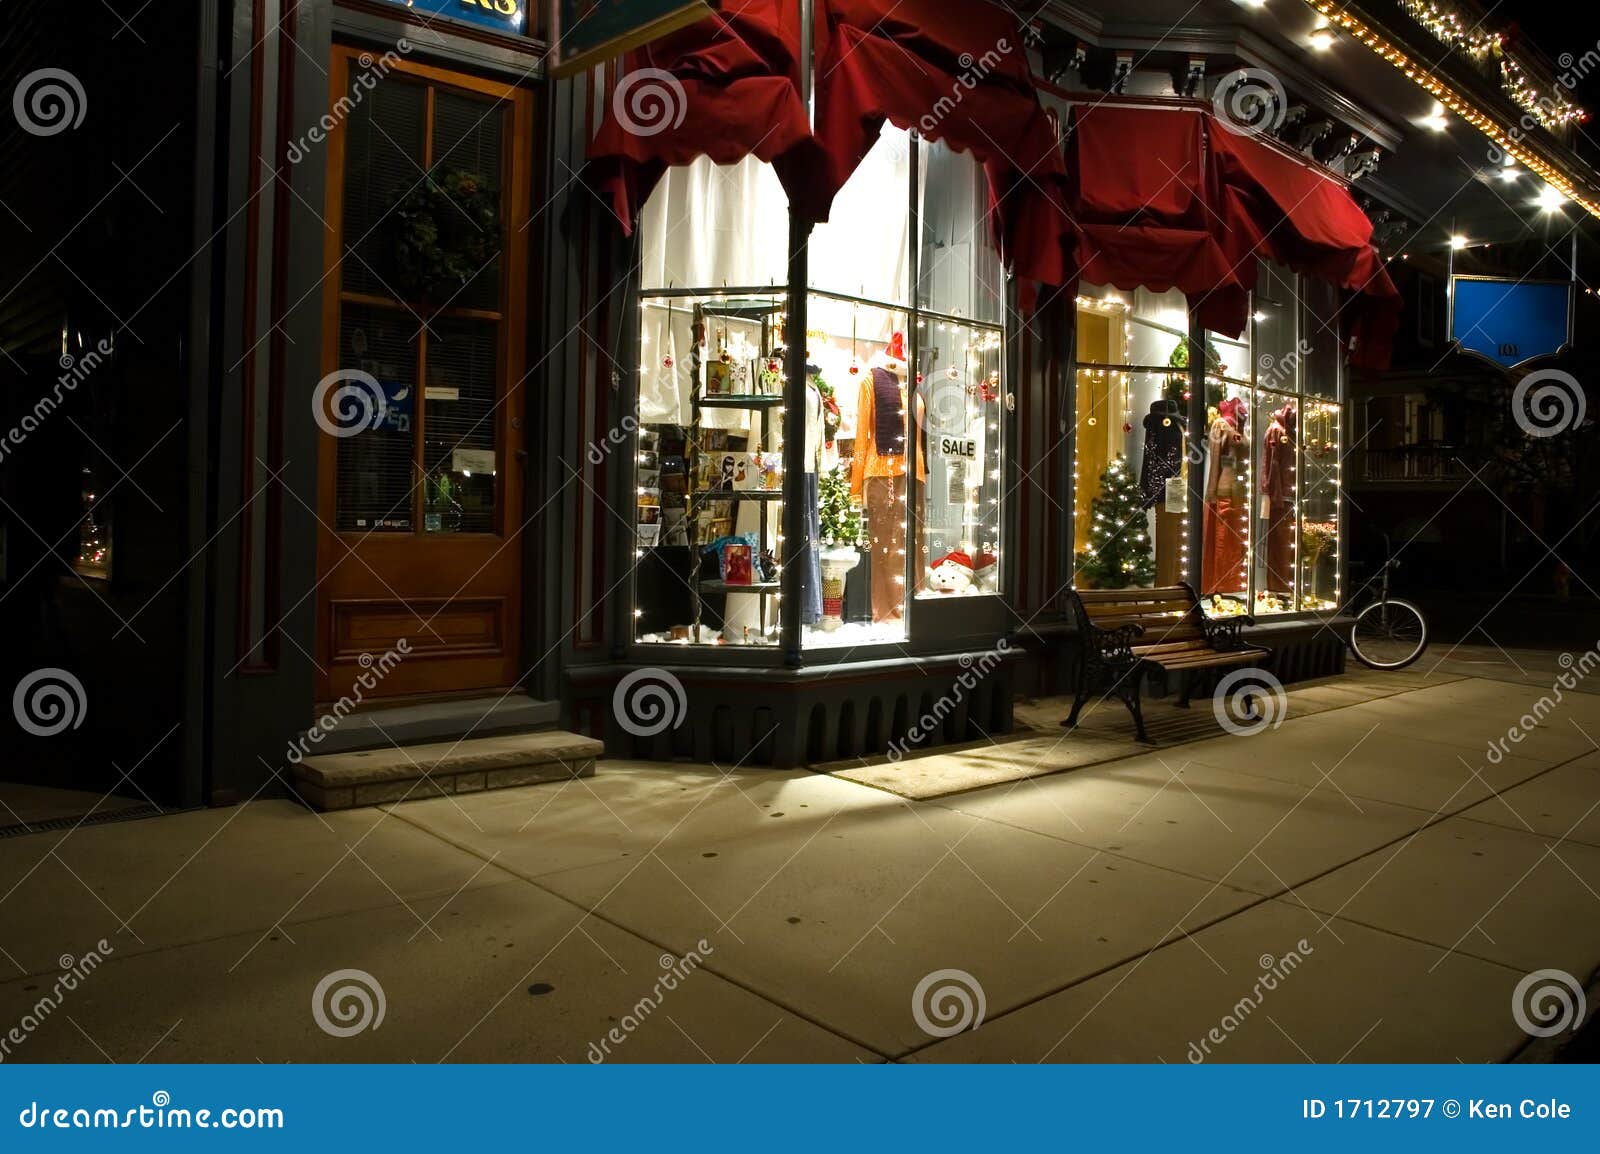 Victorian storefront